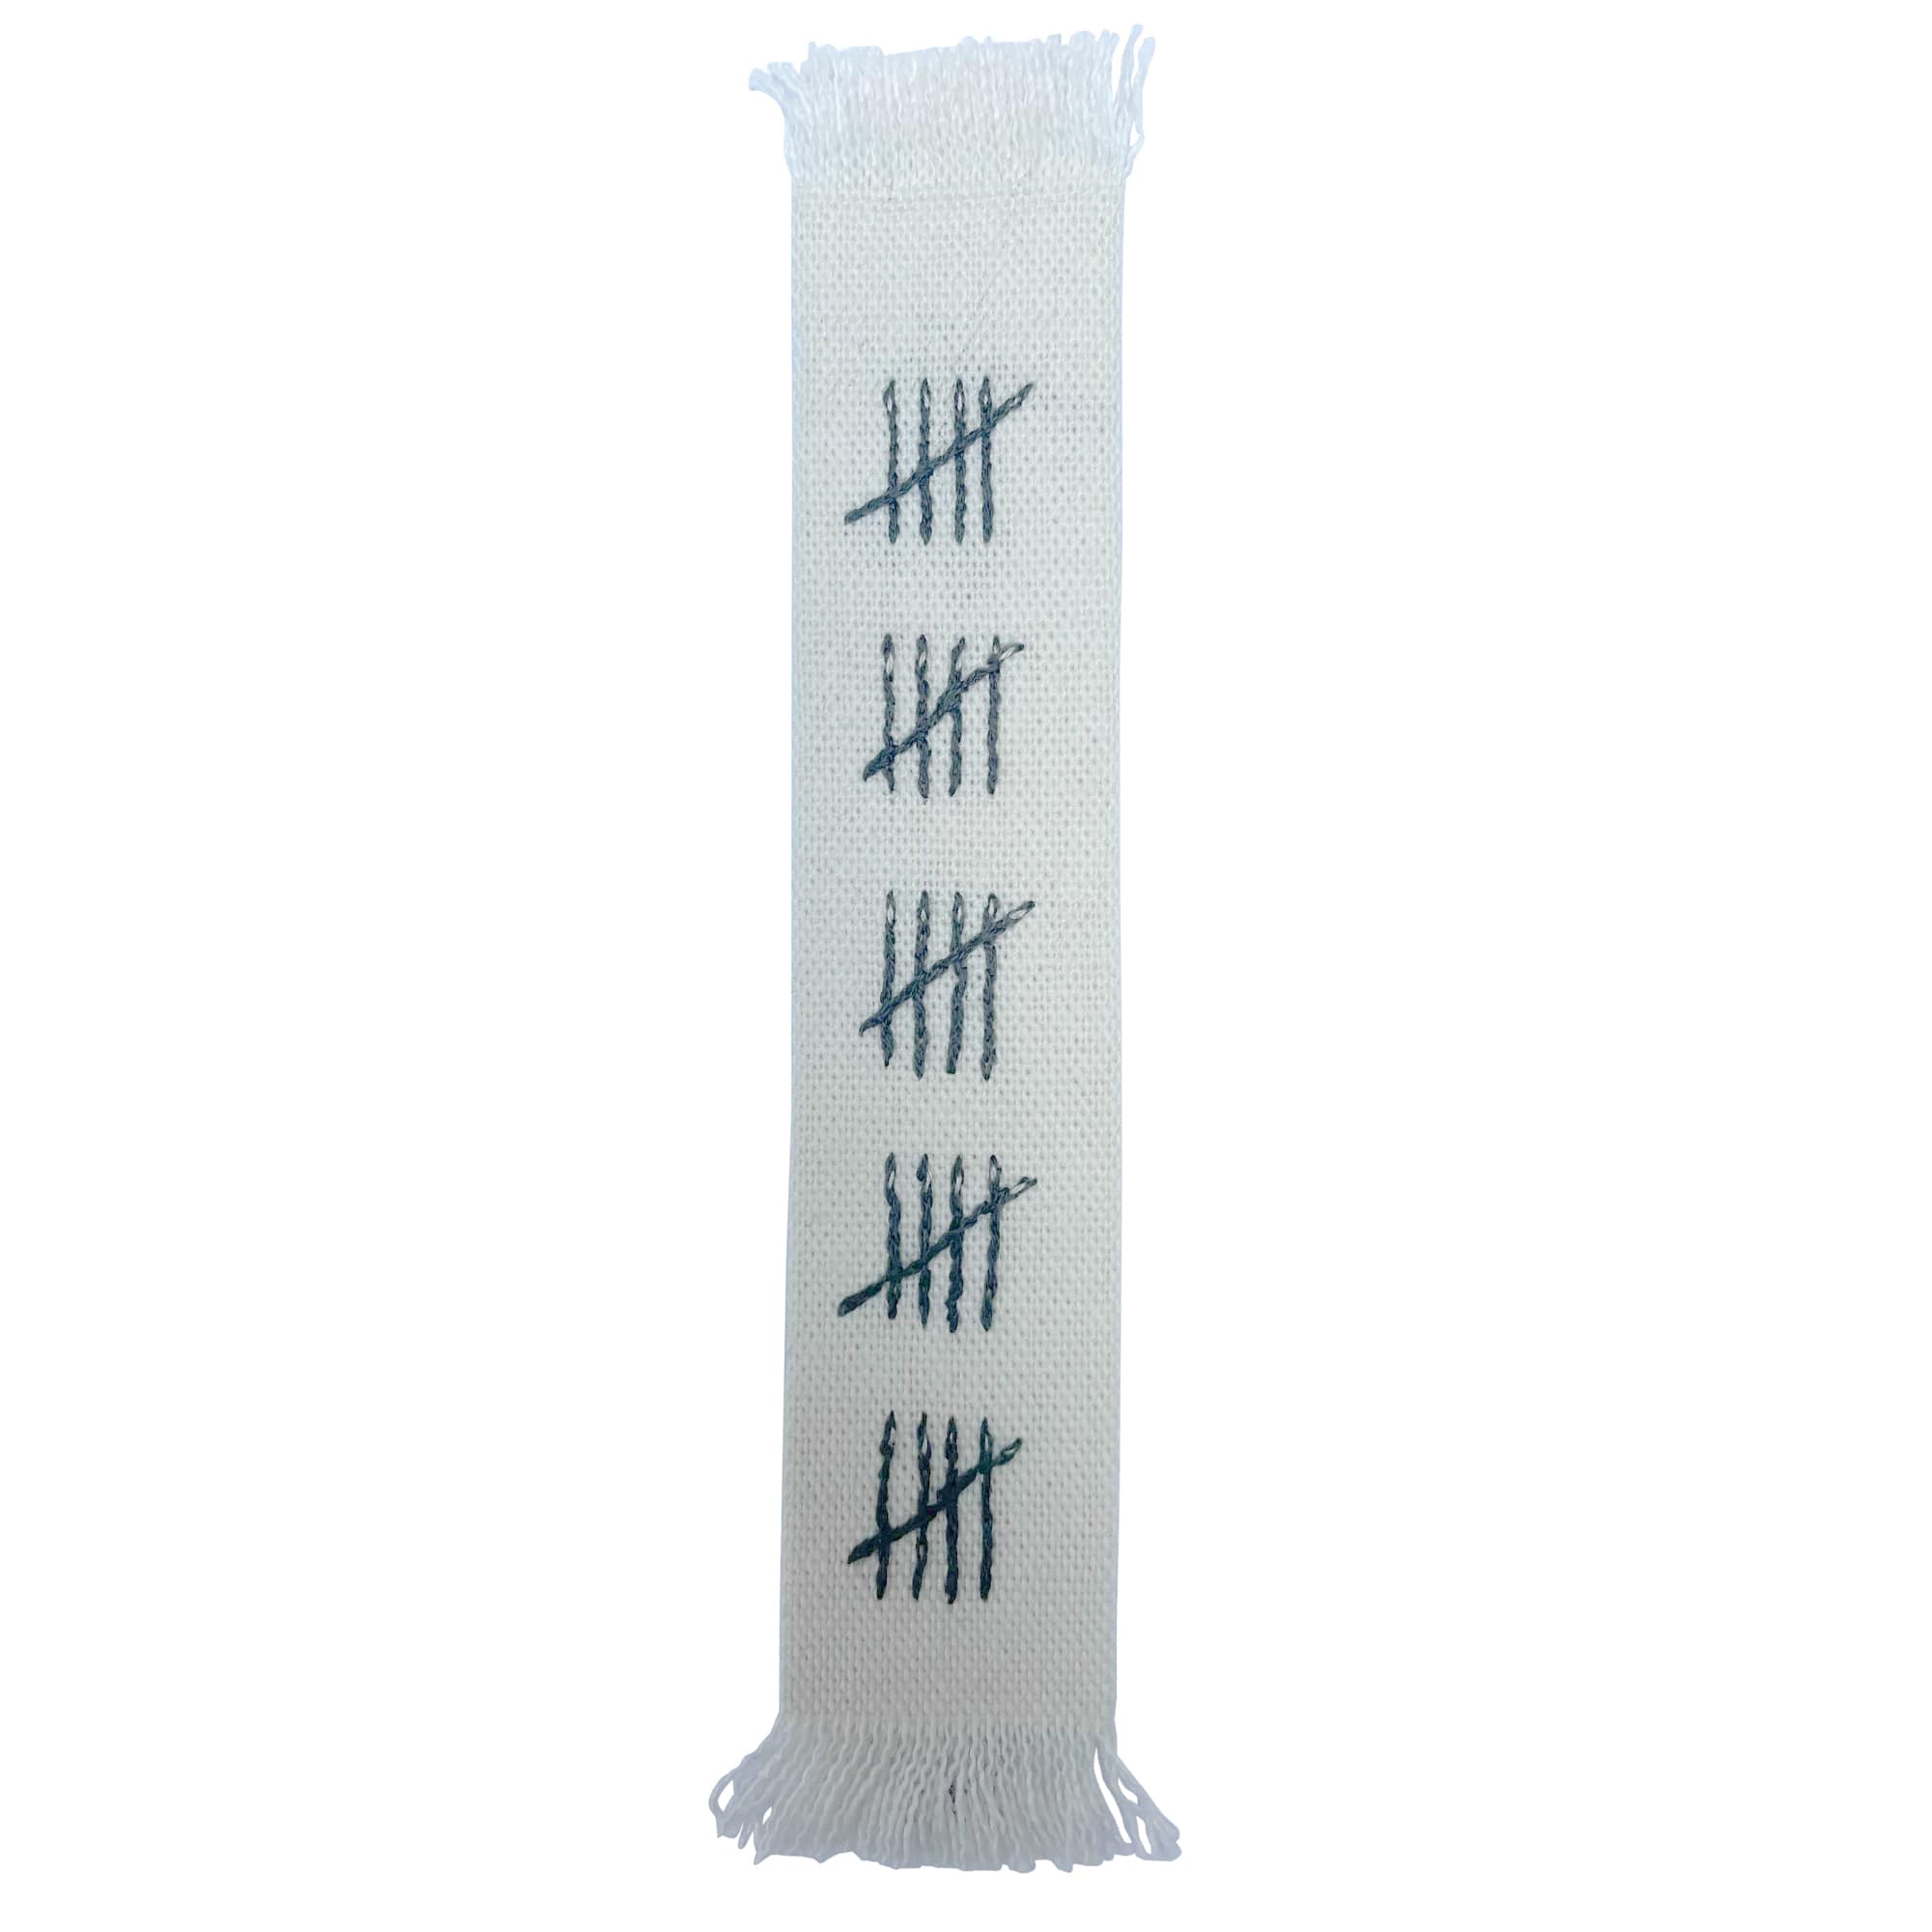 25 Year Anniversary Prison Calendar Hand-Embroidered Bookmark